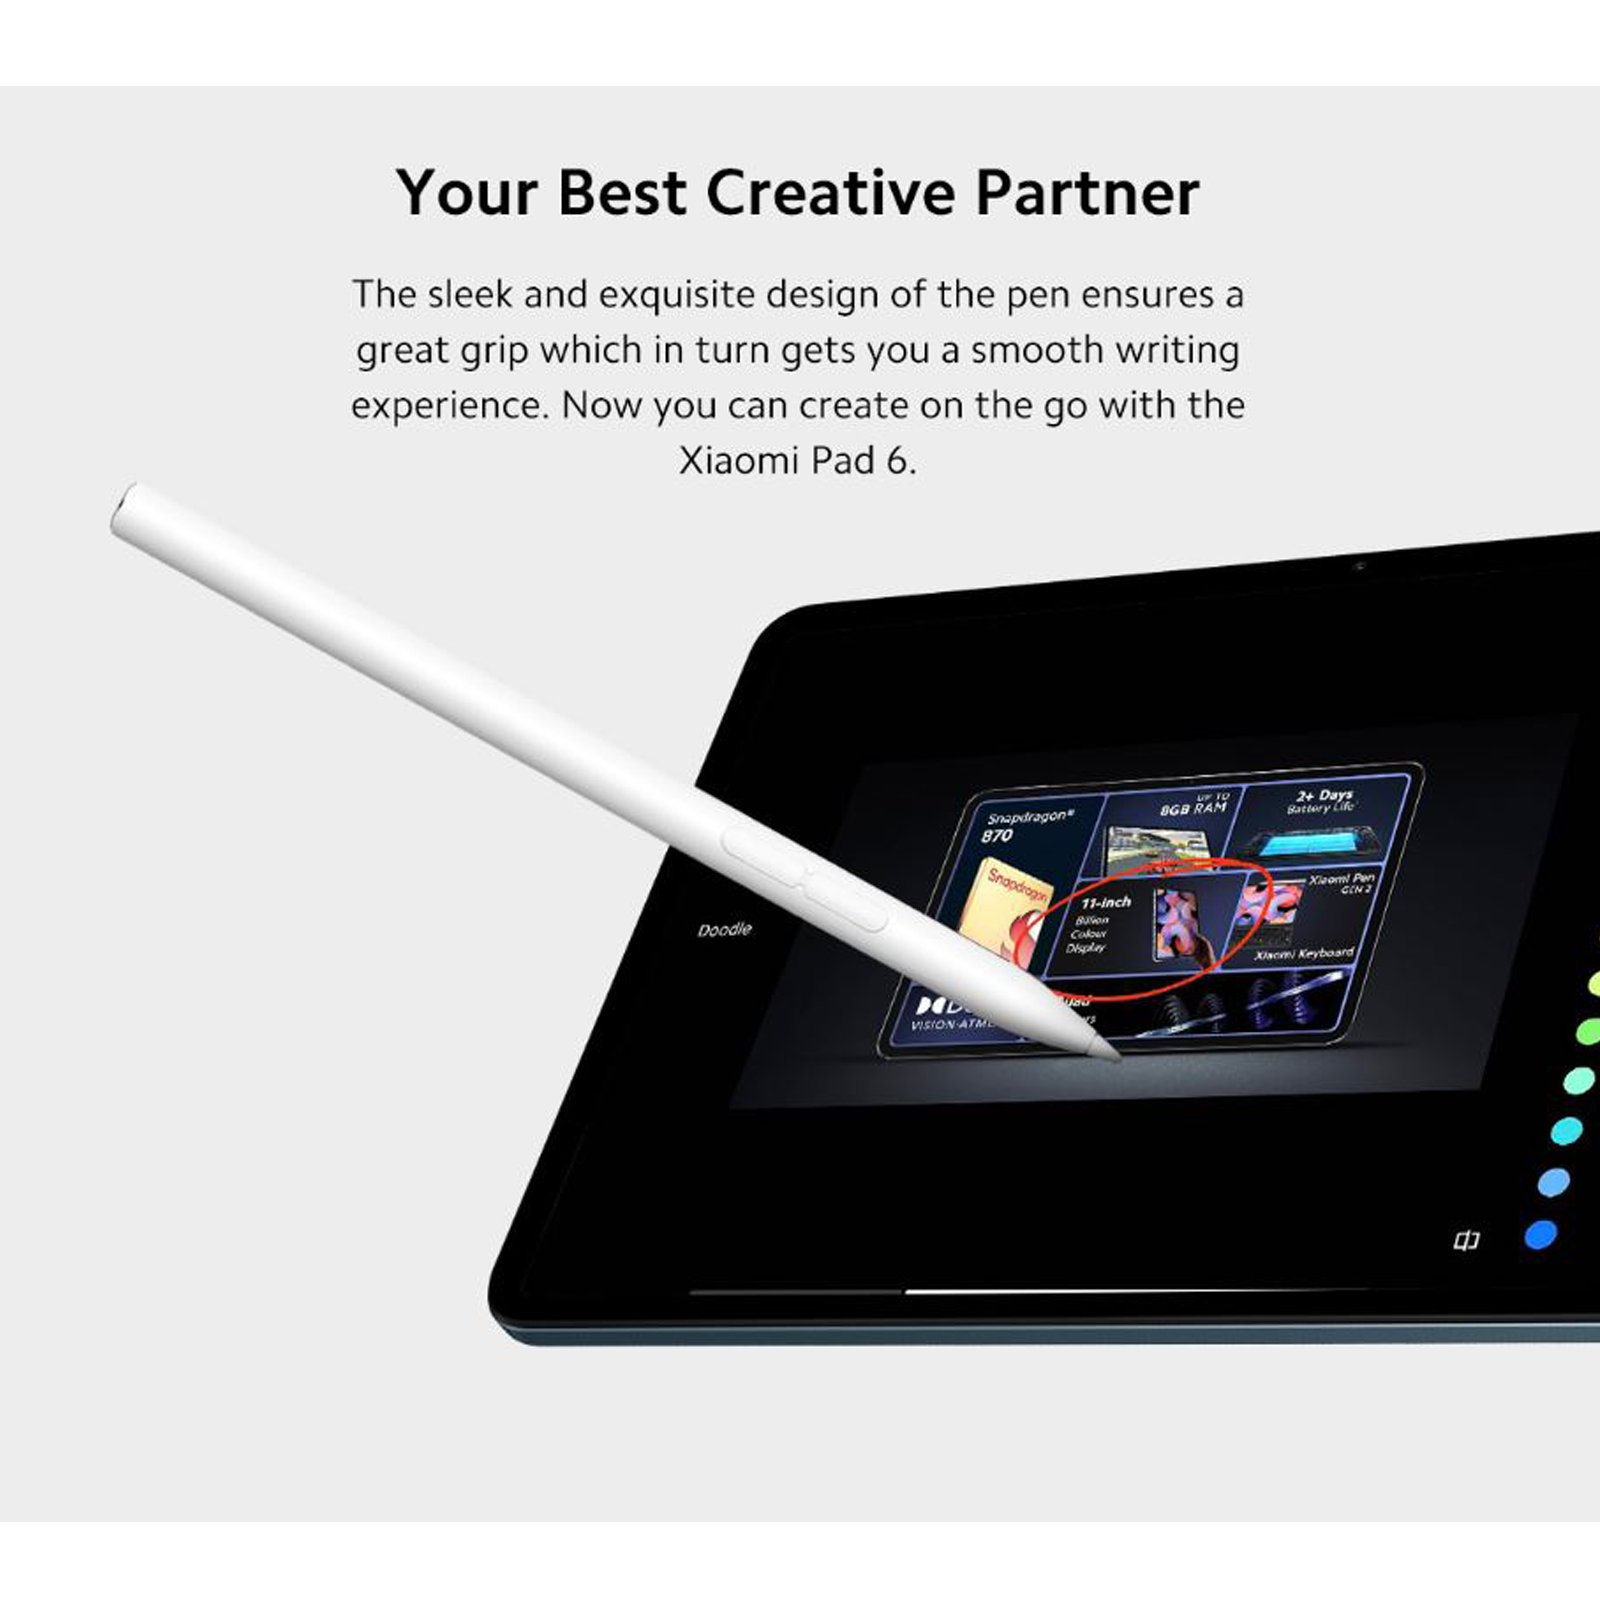 Original New Xiaomi Focus Stylus Pen for Xiaomi Pad 6 Max 14.0 Inch Tablet  PC